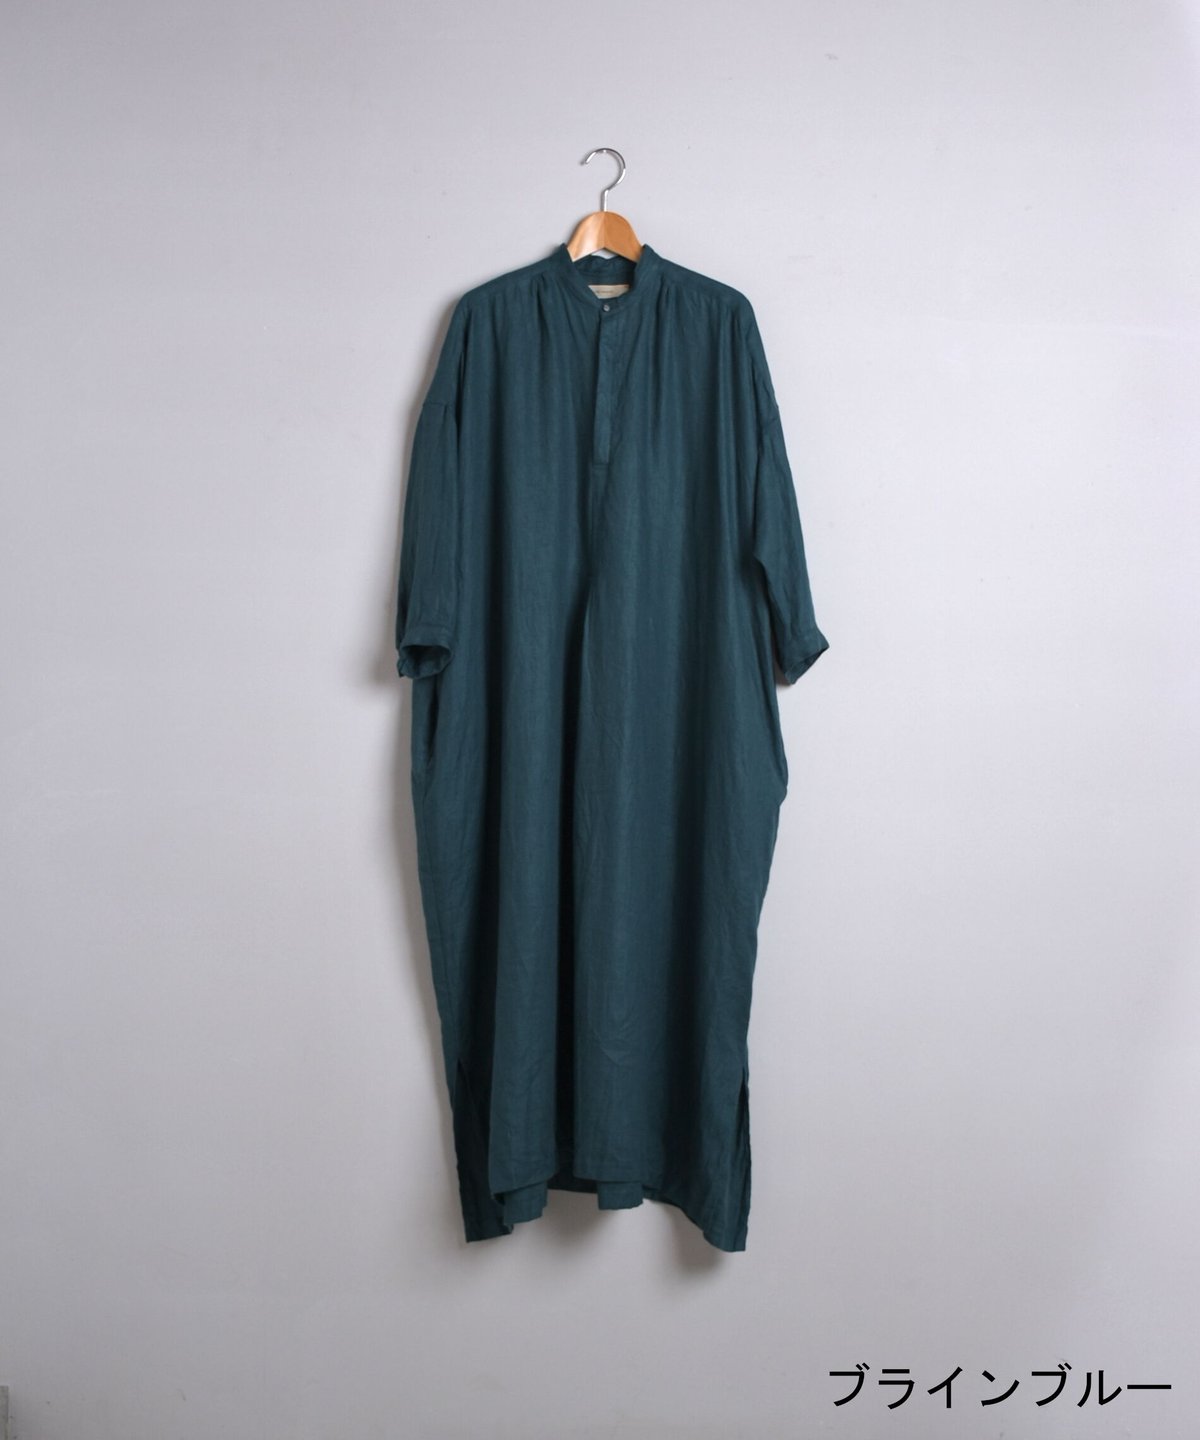 suzuki takayuki / peasant dress Ⅰ | Taine Onlin...